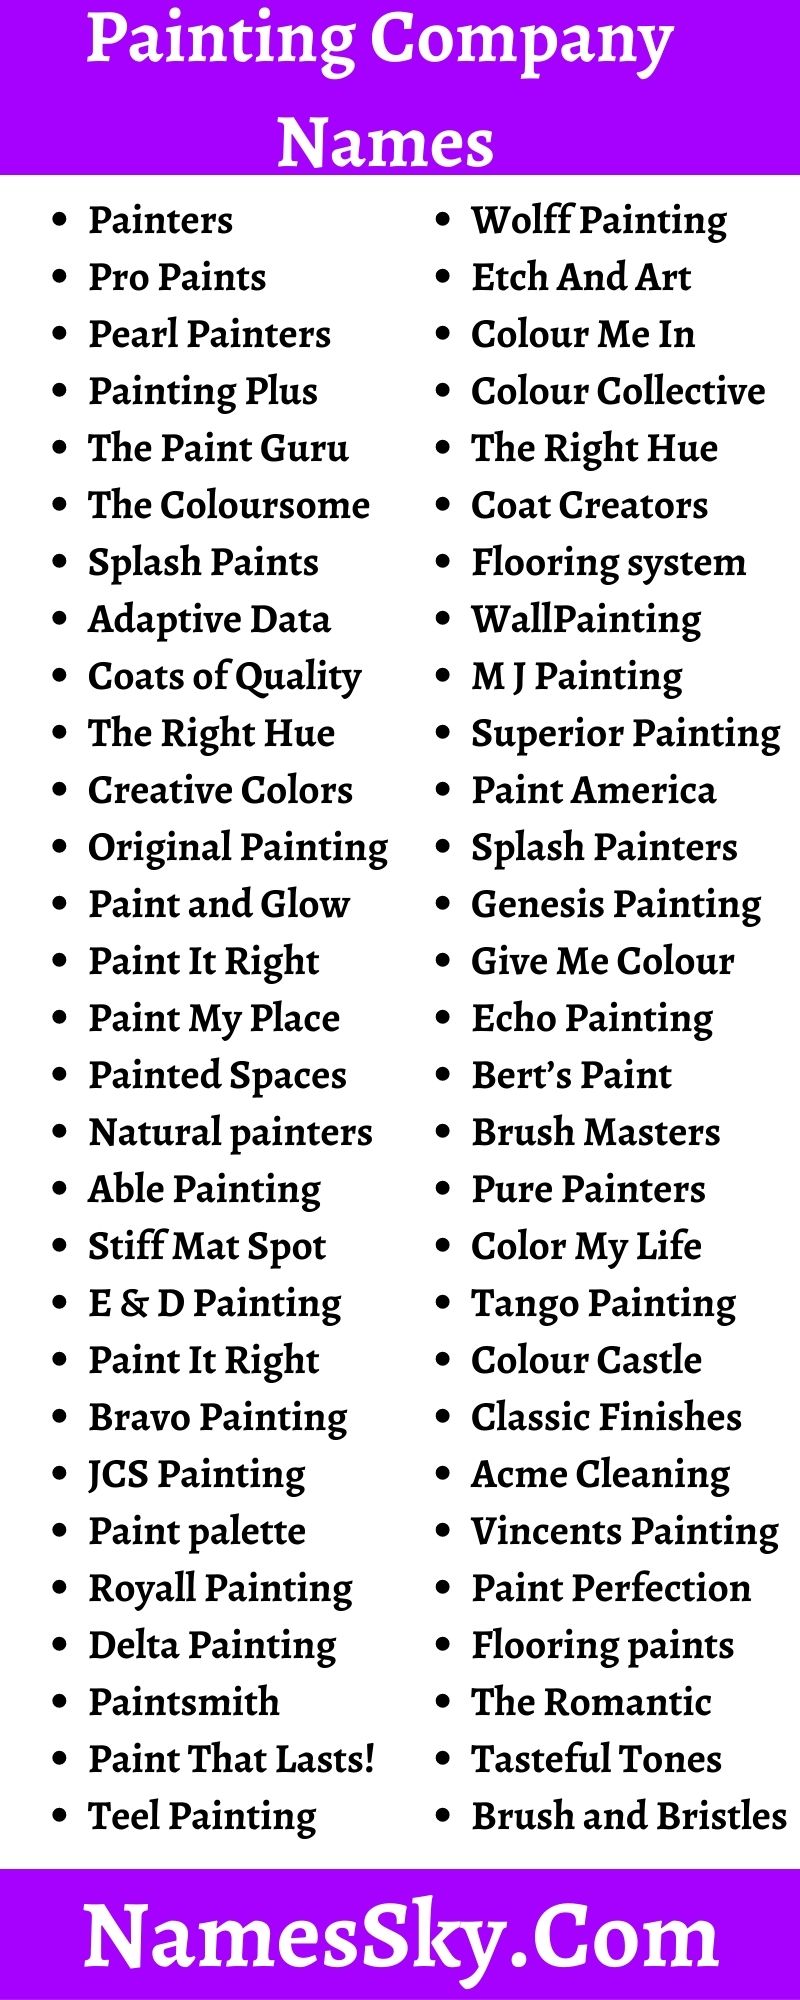 Painting Company Names